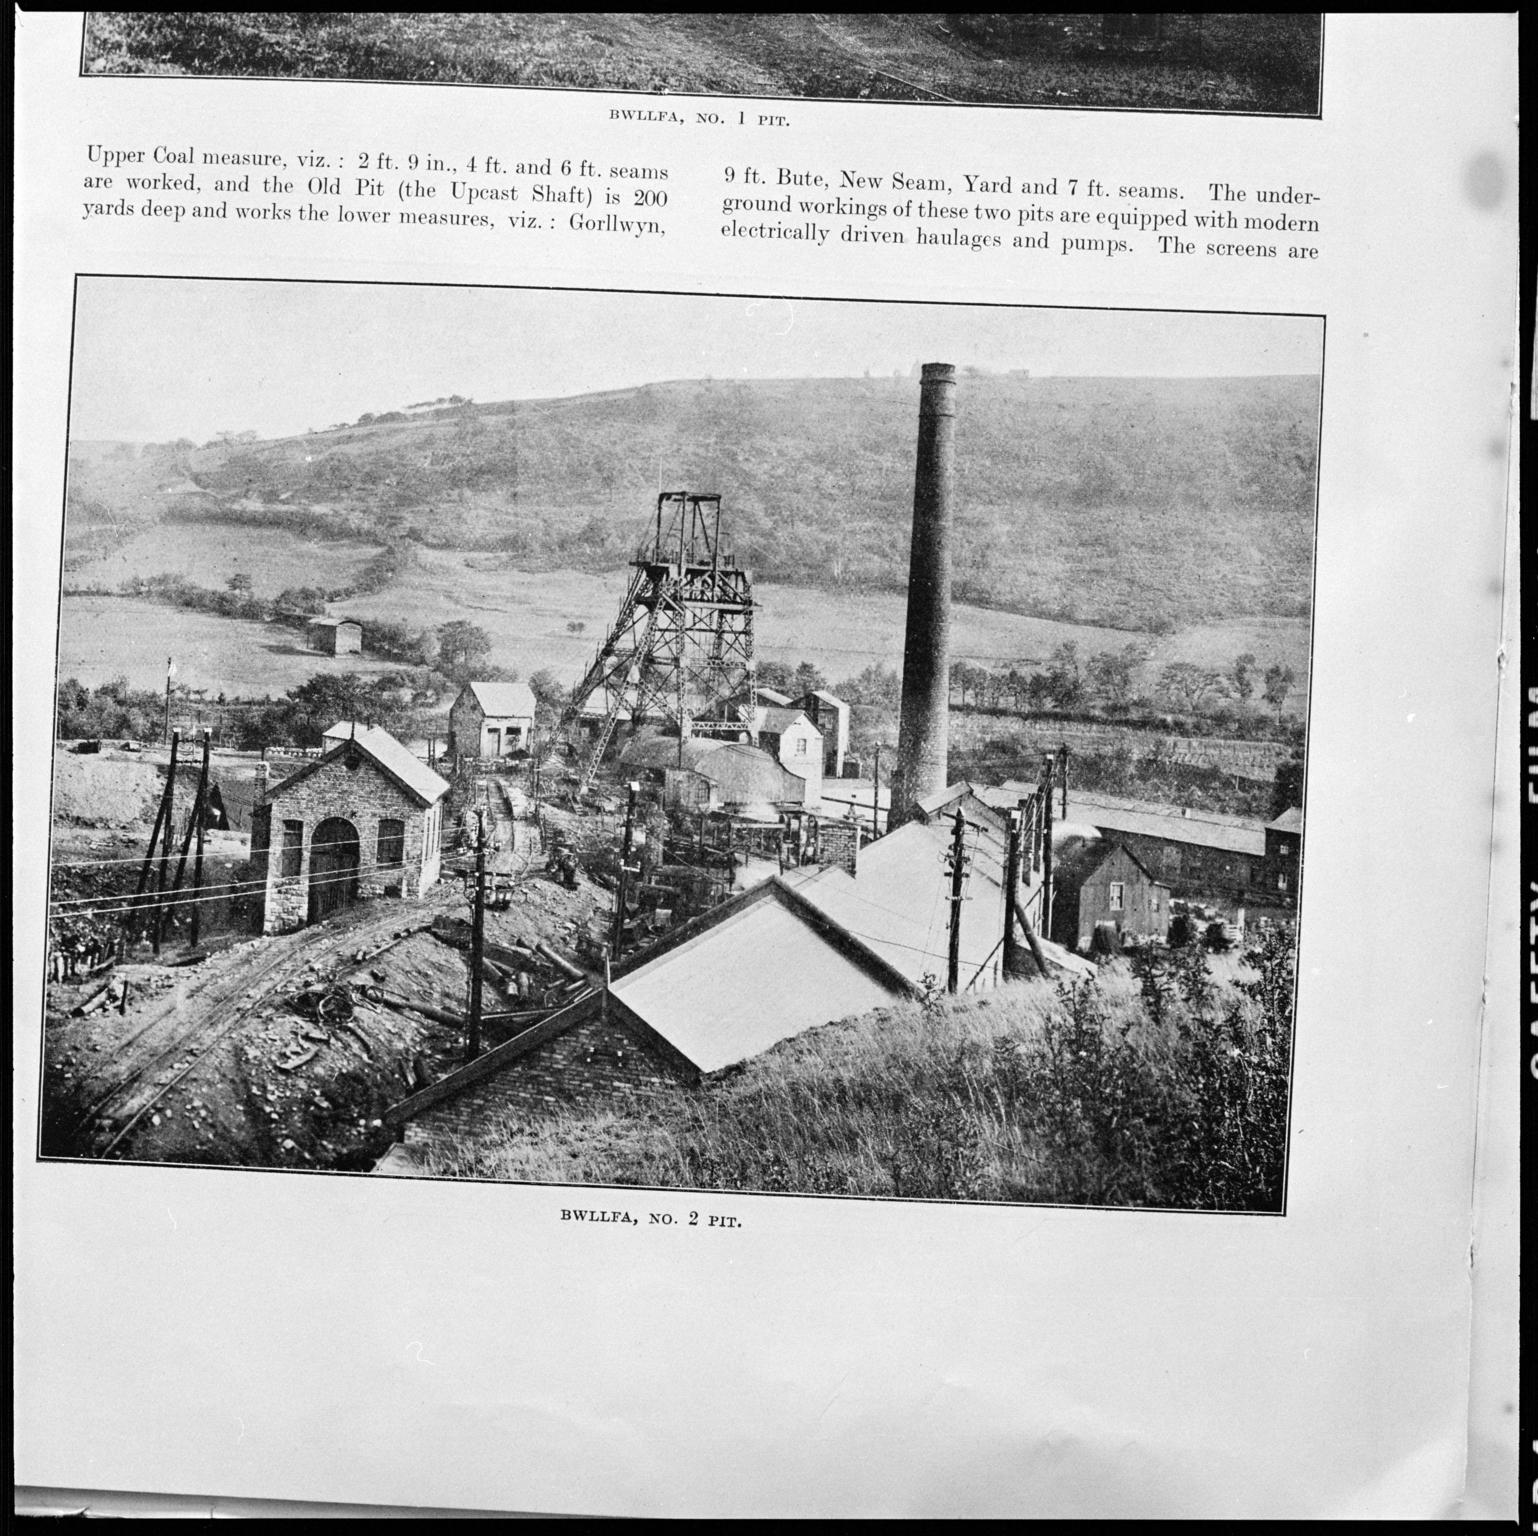 Bwllfa Colliery, film negative